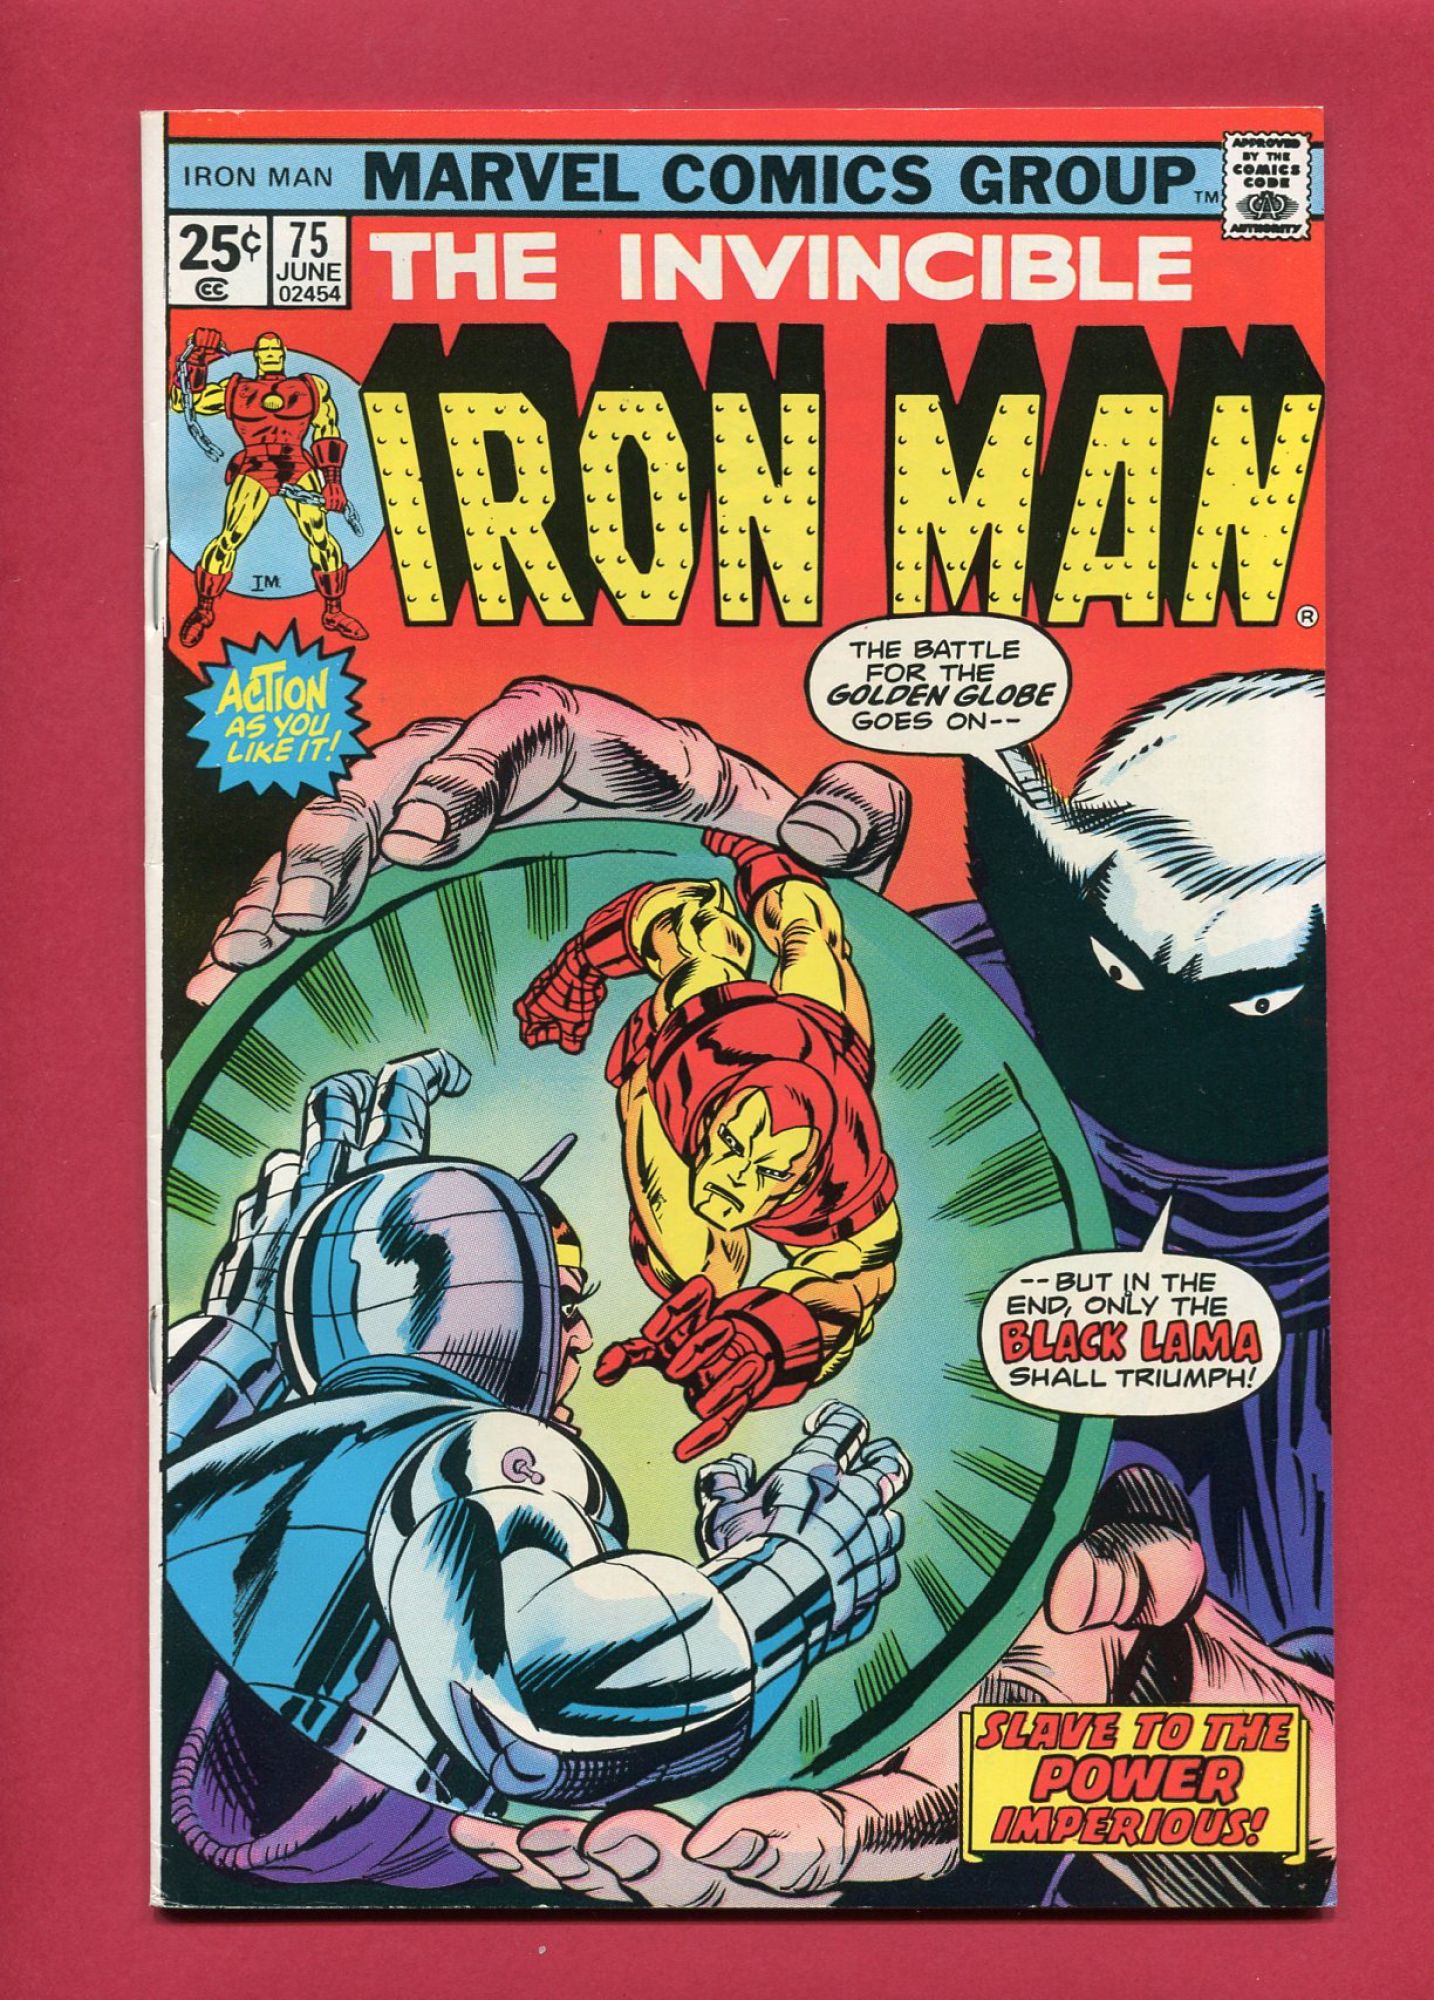 Iron Man #75, Jun 1975, 8.0 VF